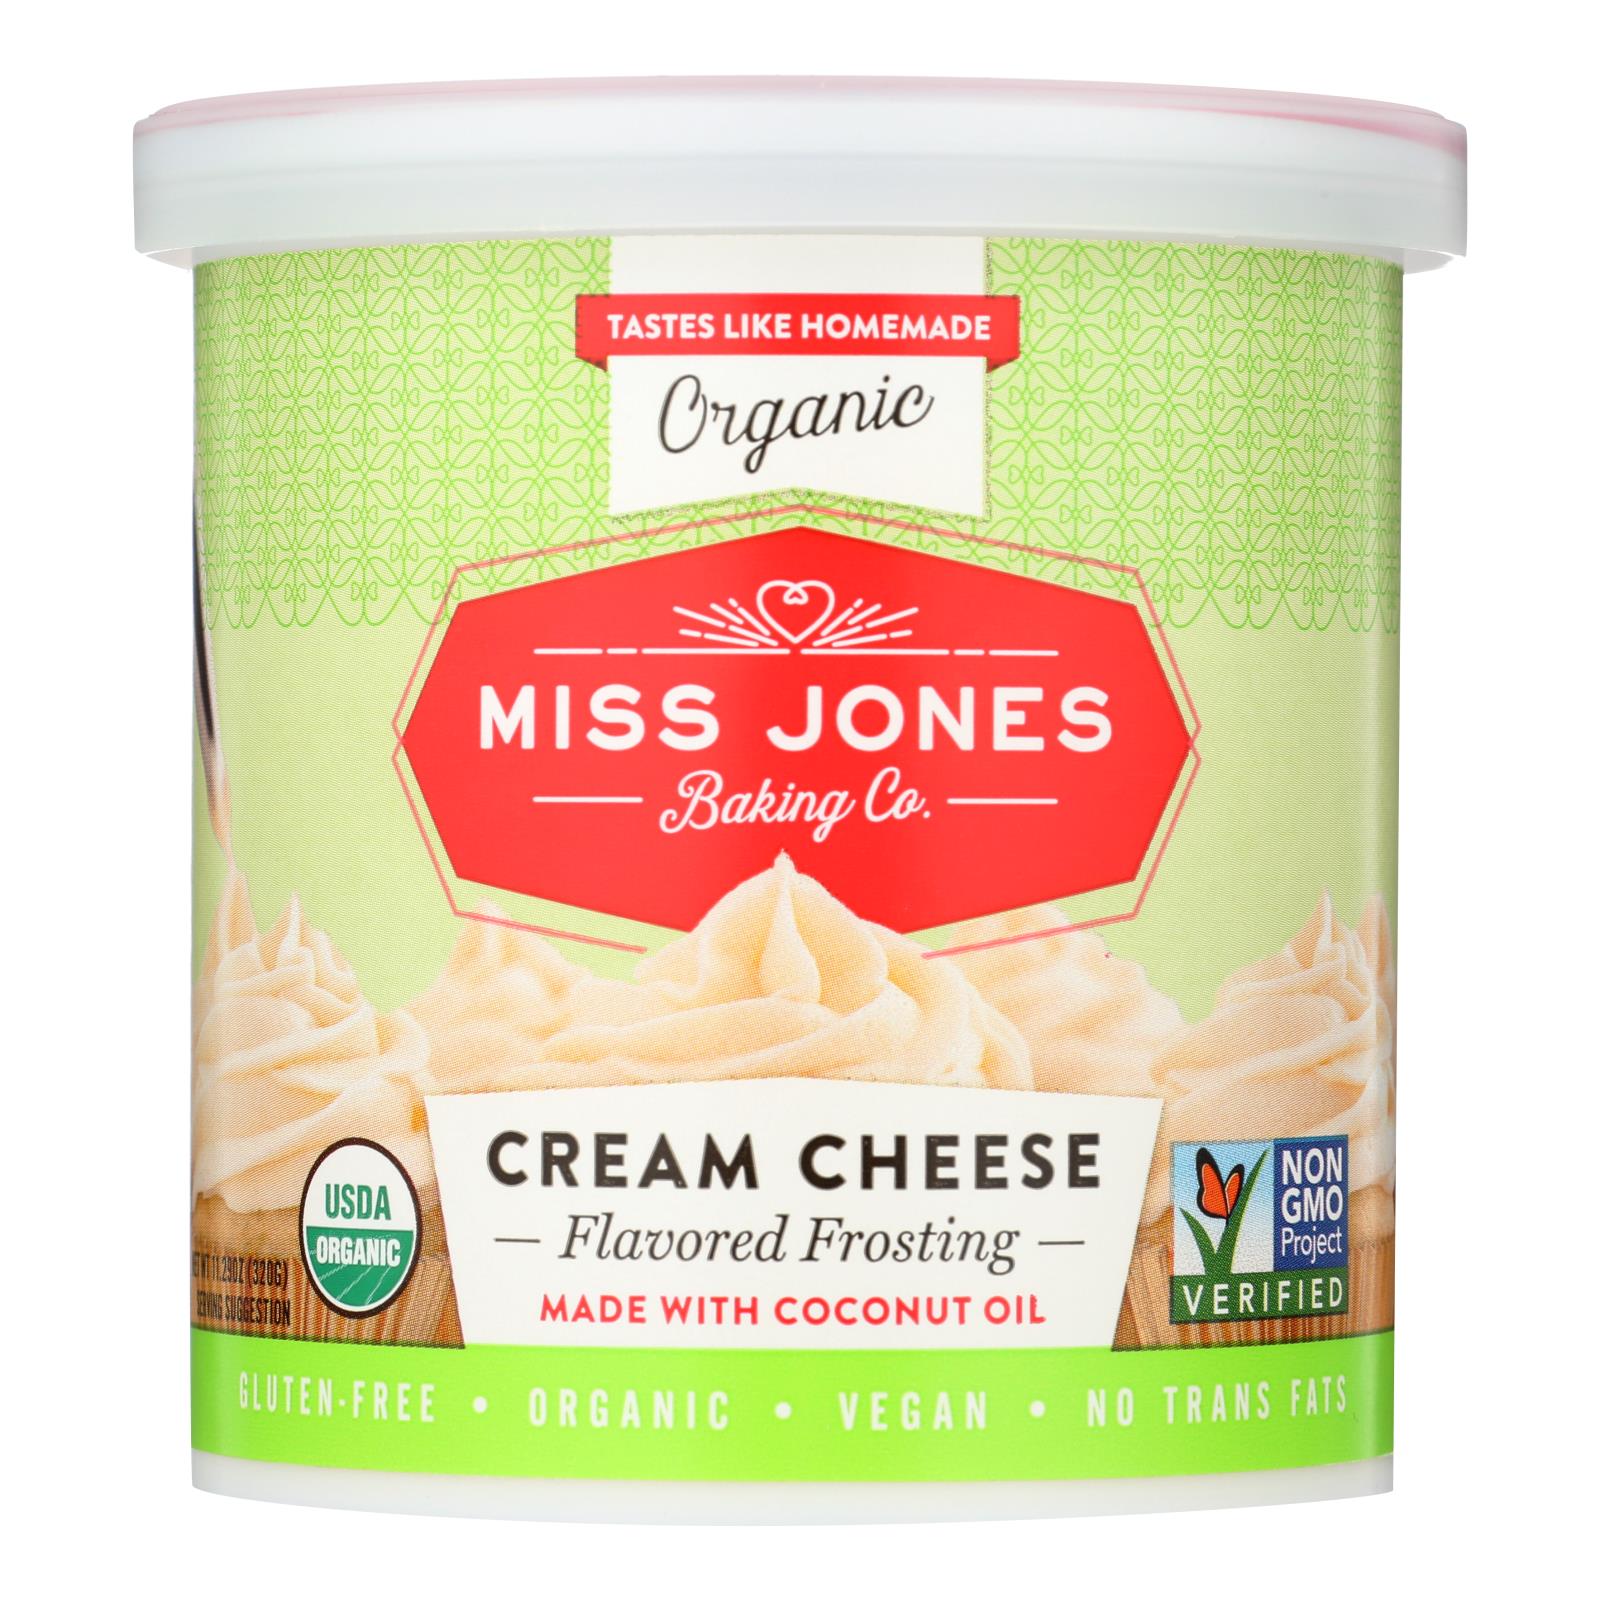 Miss Jones Baking Co Organic Cream Cheese - 6개 묶음상품 - 11.29 OZ